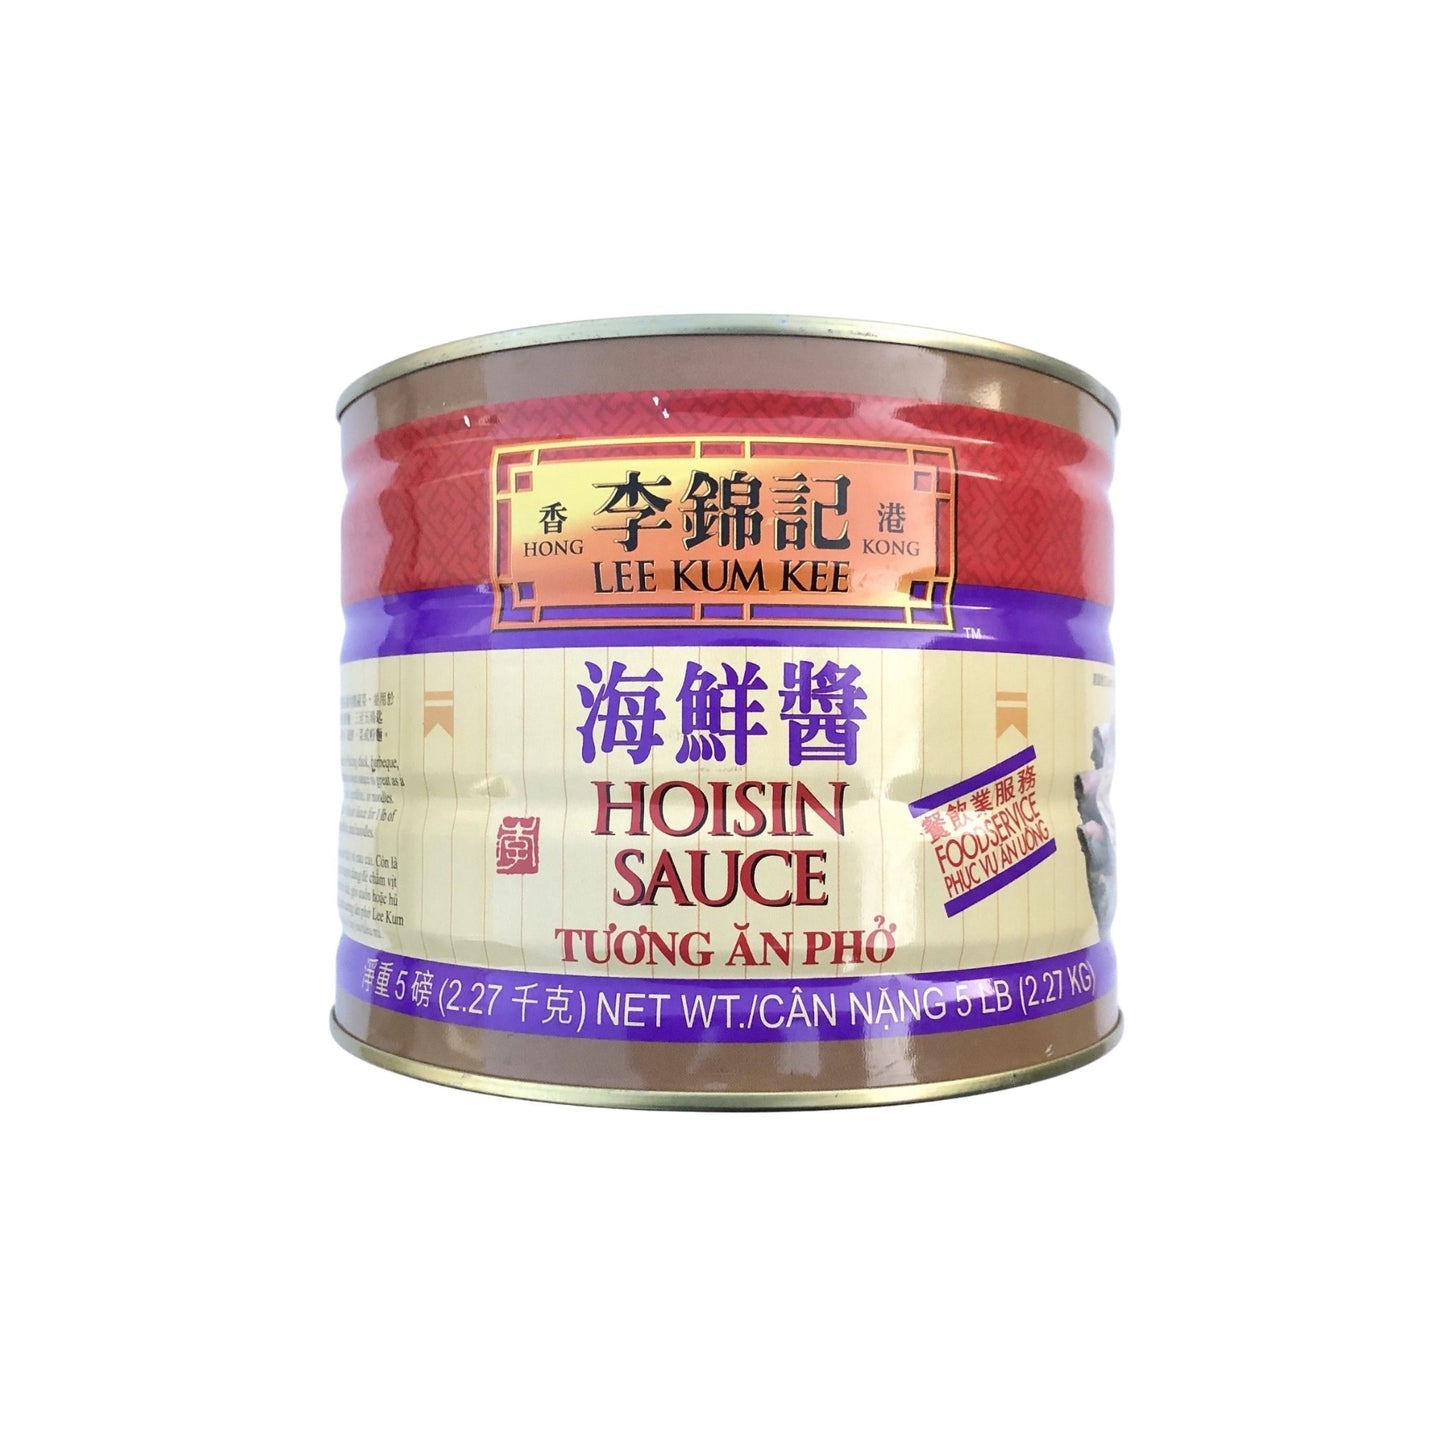 LKK Hoisin Sauce 海鲜酱 (5 LBS 一罐)